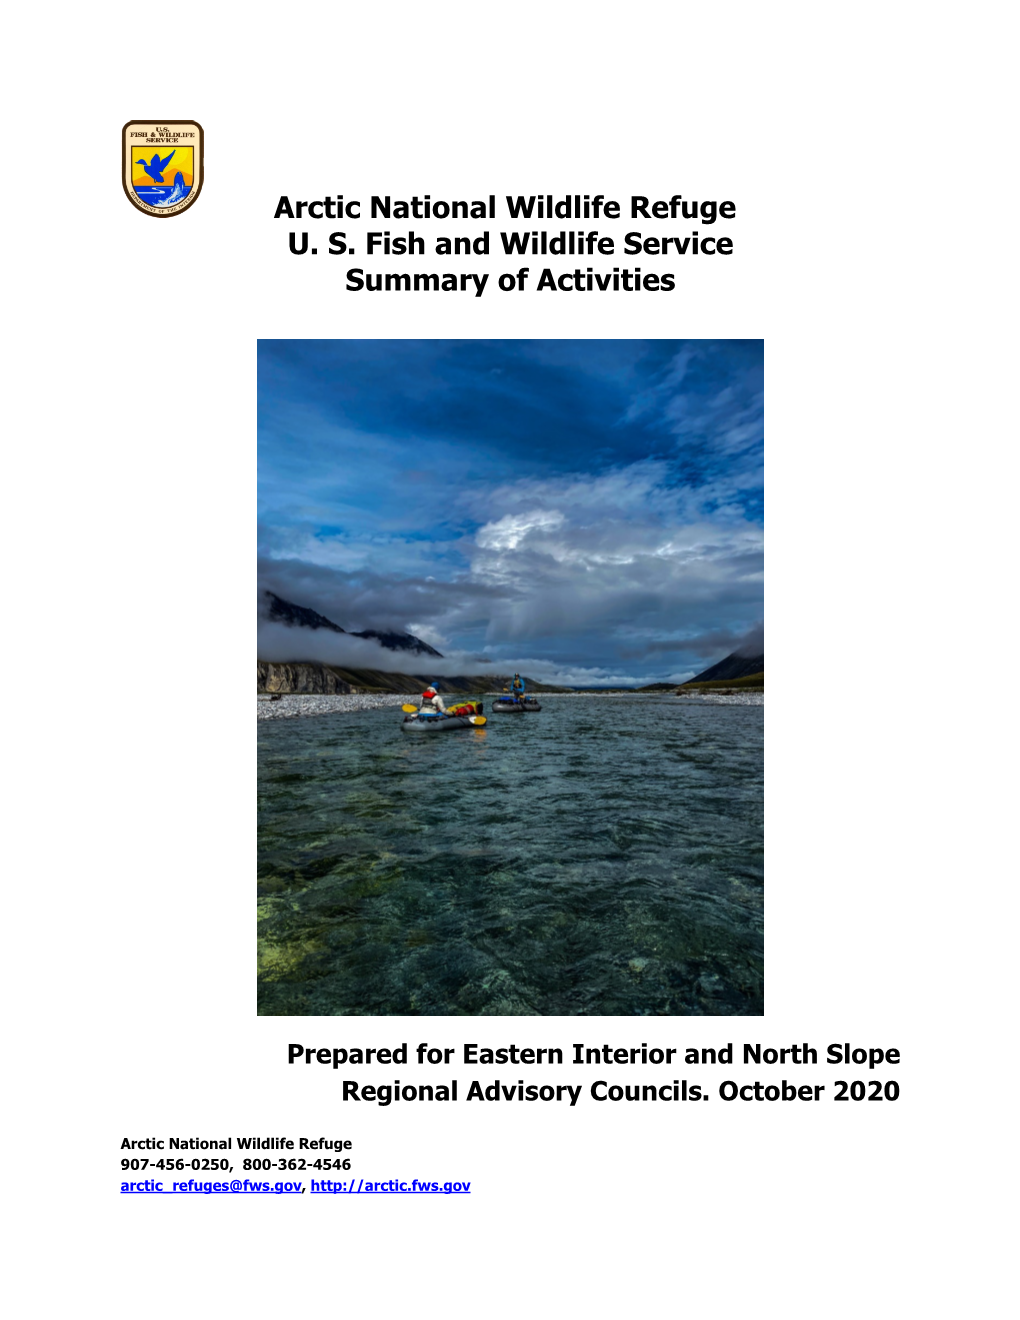 Arctic National Wildlife Refuge Summary of Activities